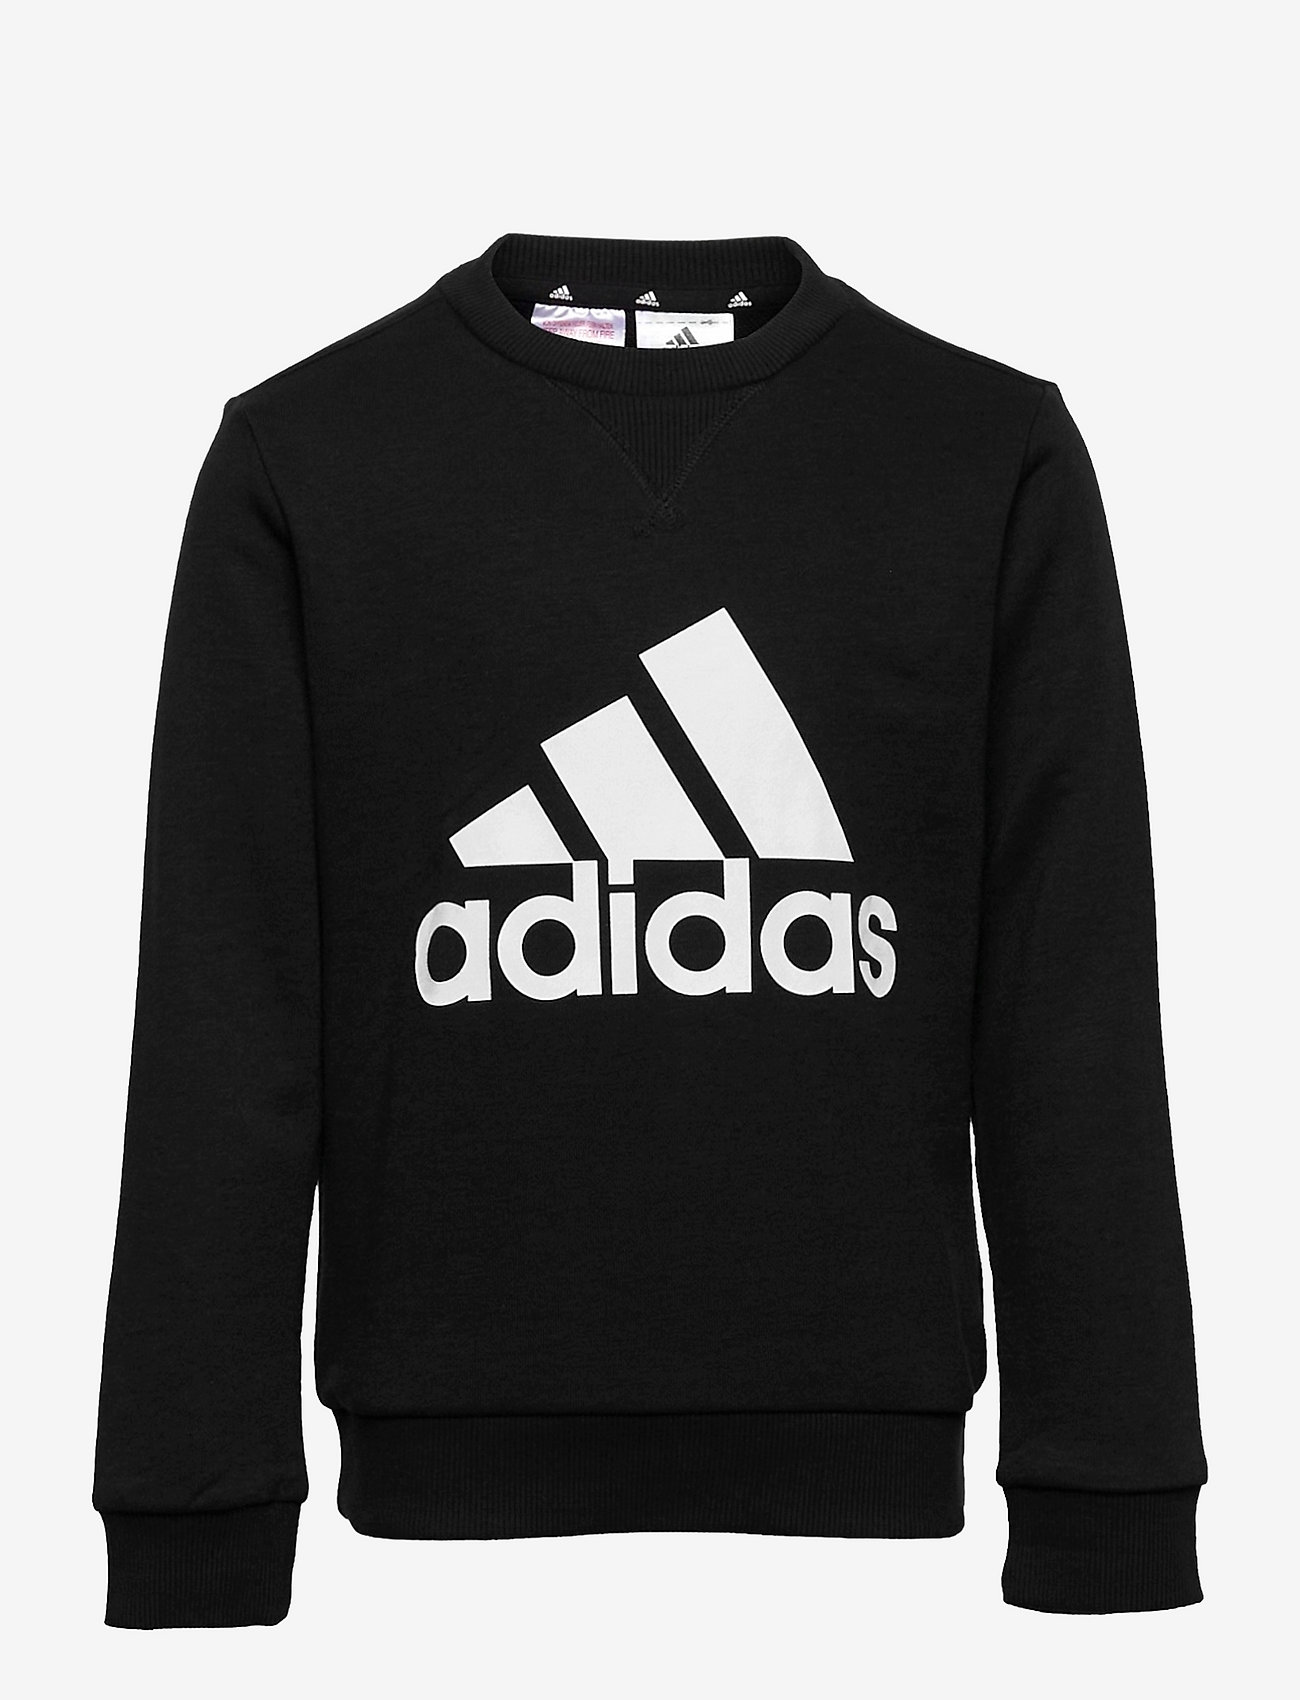 KINDER Pullovers & Sweatshirts Sport Rabatt 47 % Adidas sweatshirt Schwarz/Weiß 16Y 